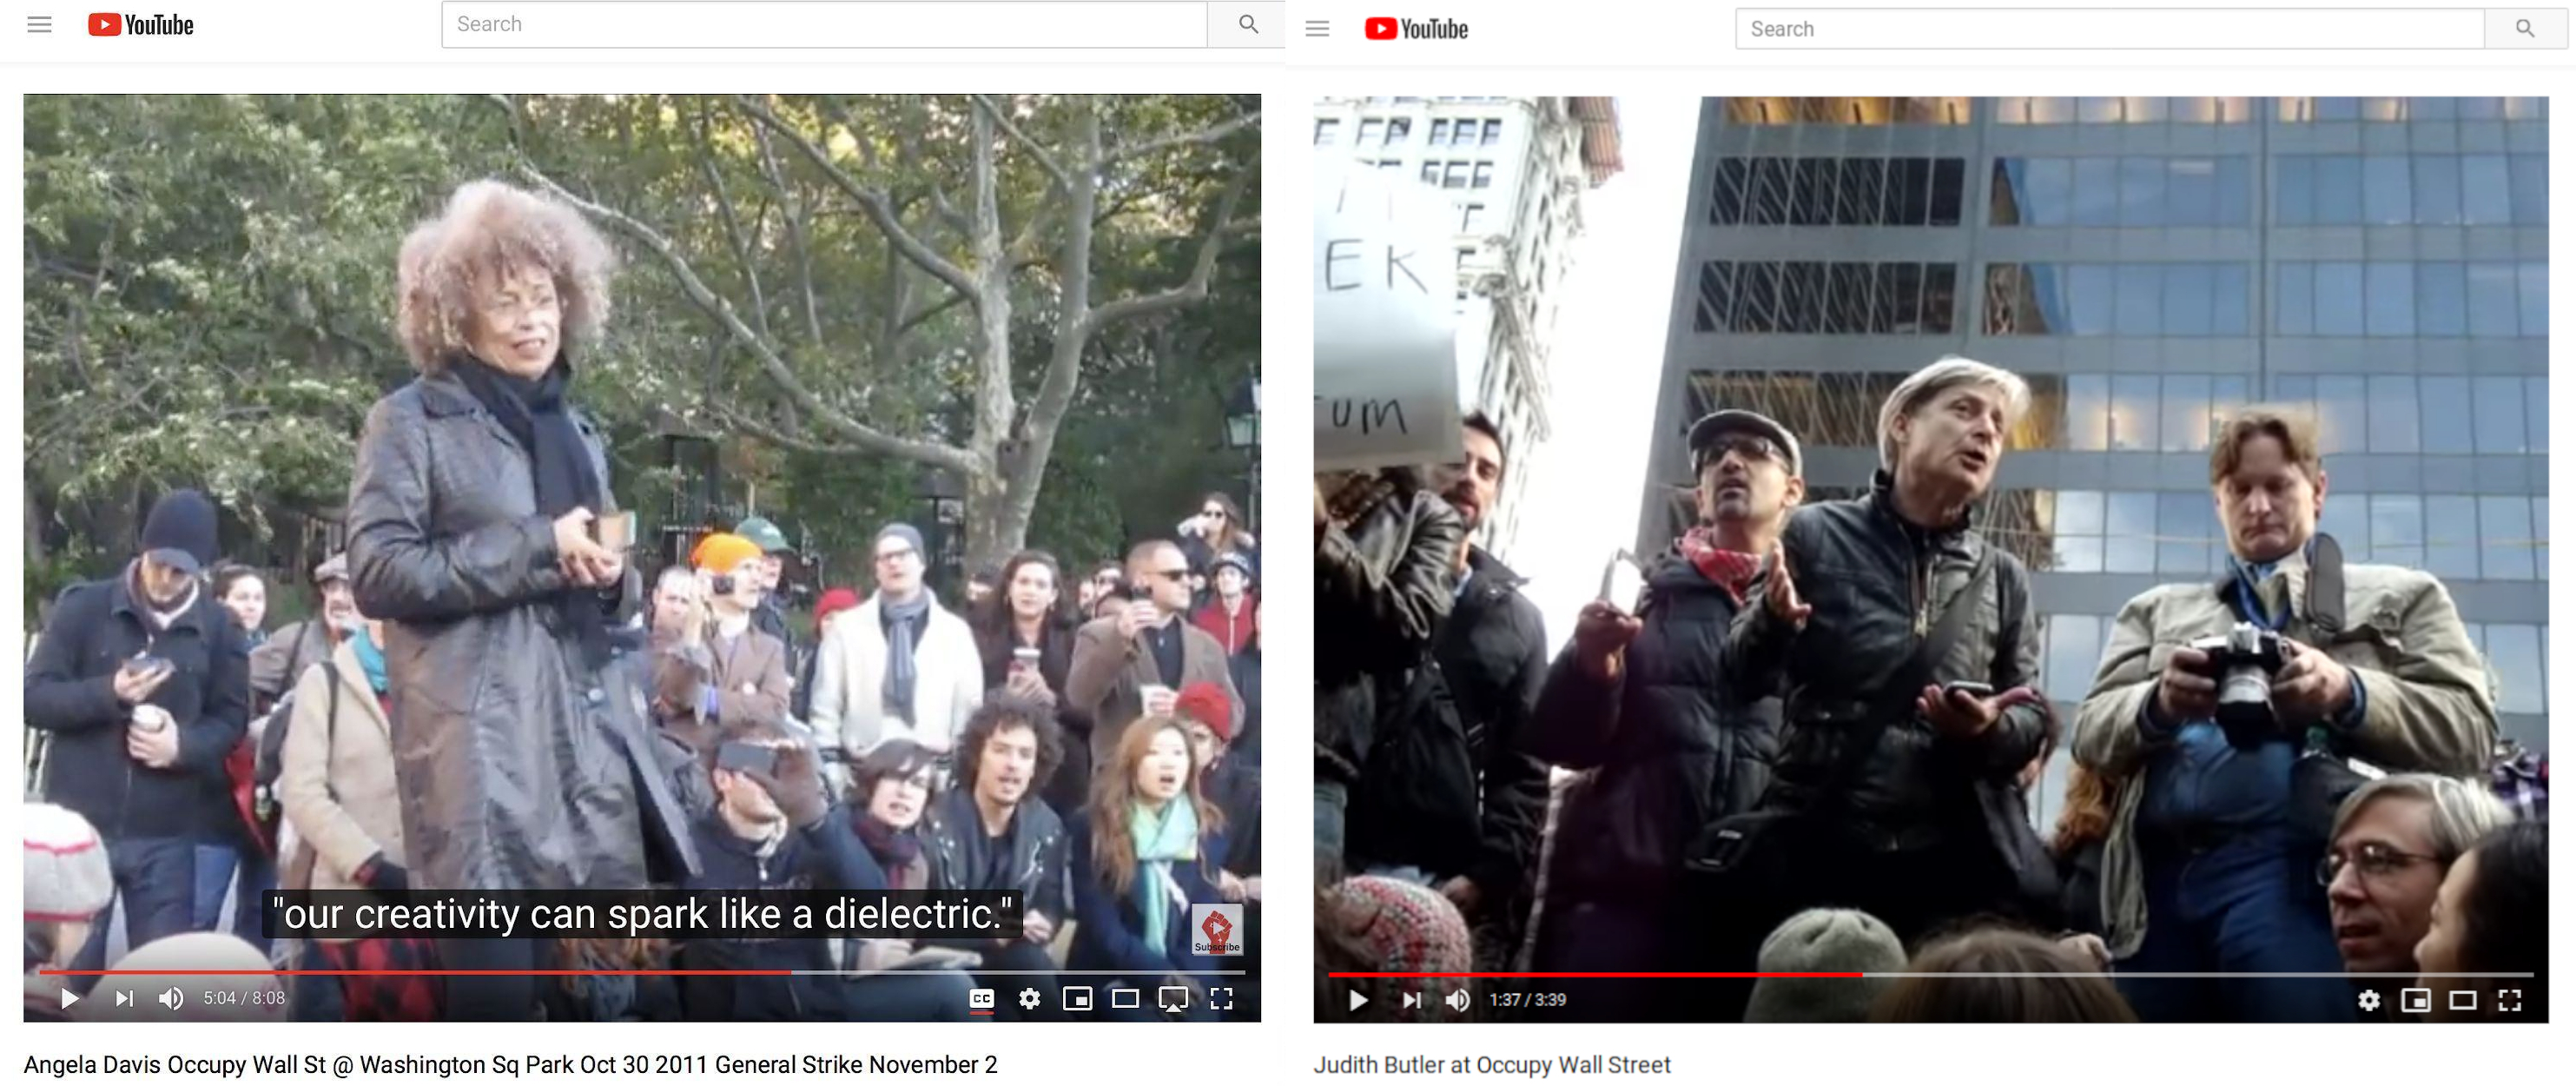 Angela Davis and Judith Butler speeches in Occupy Wall Street